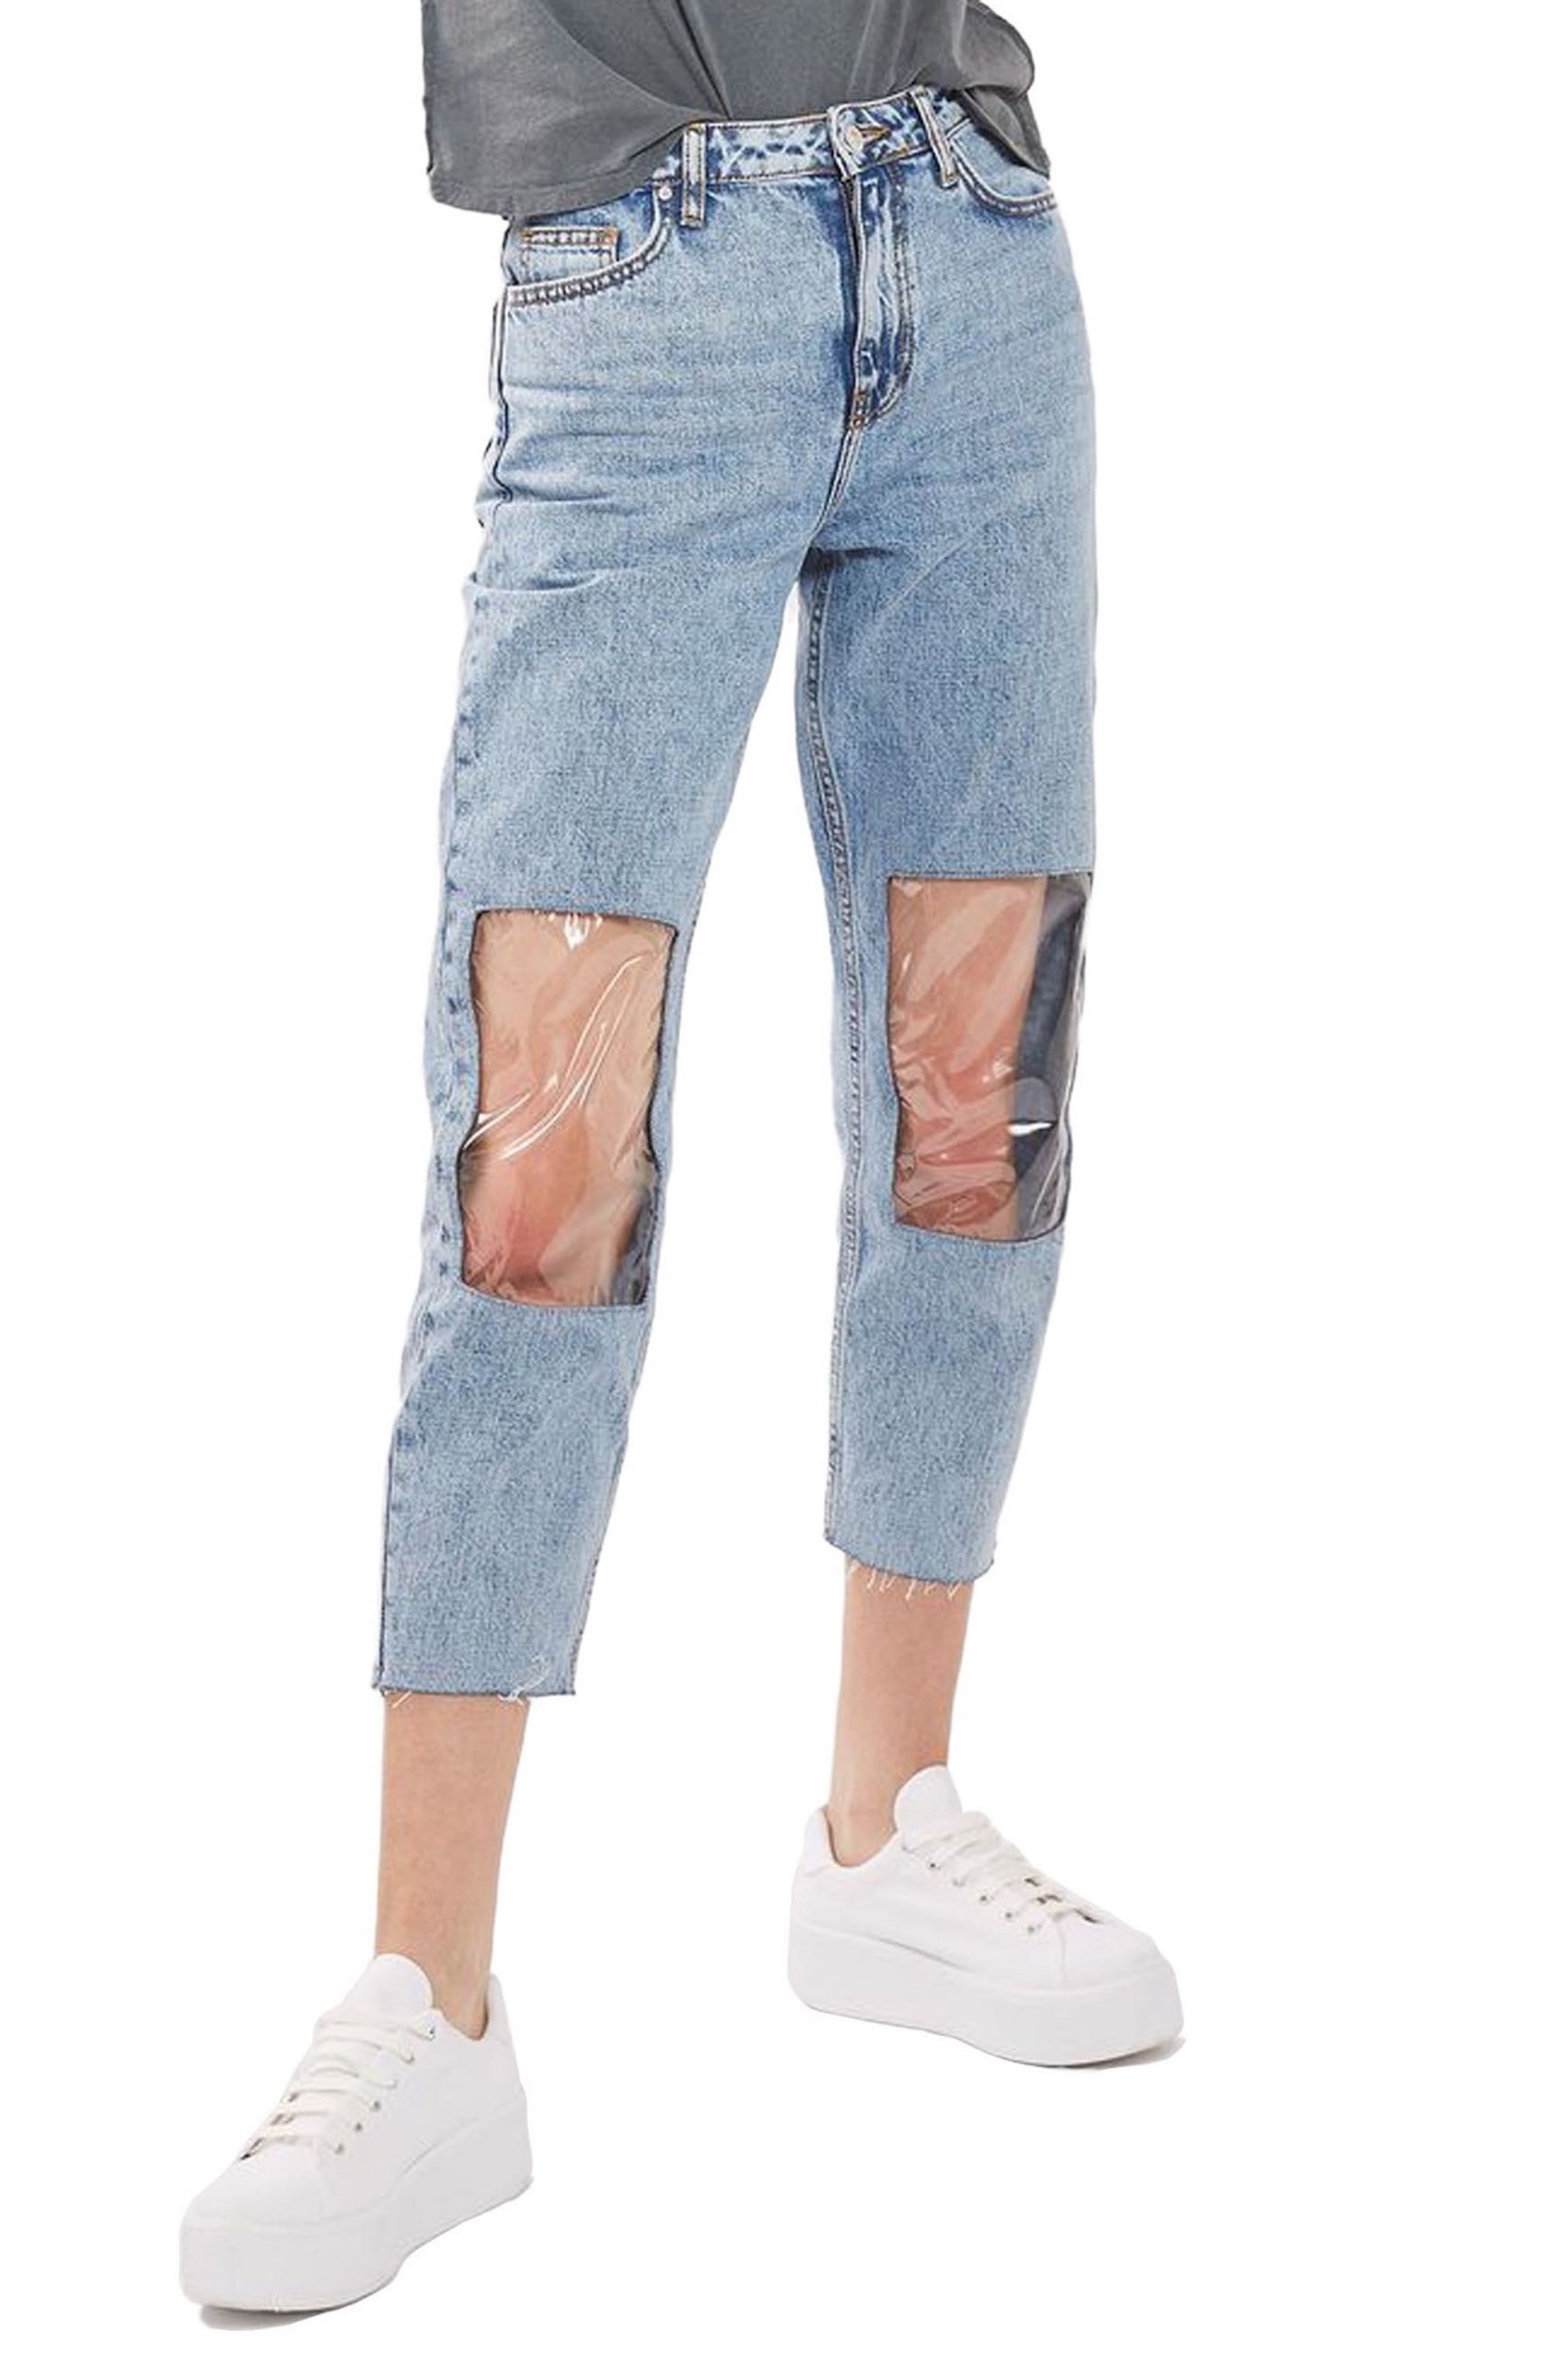 topshop bedazzled jeans